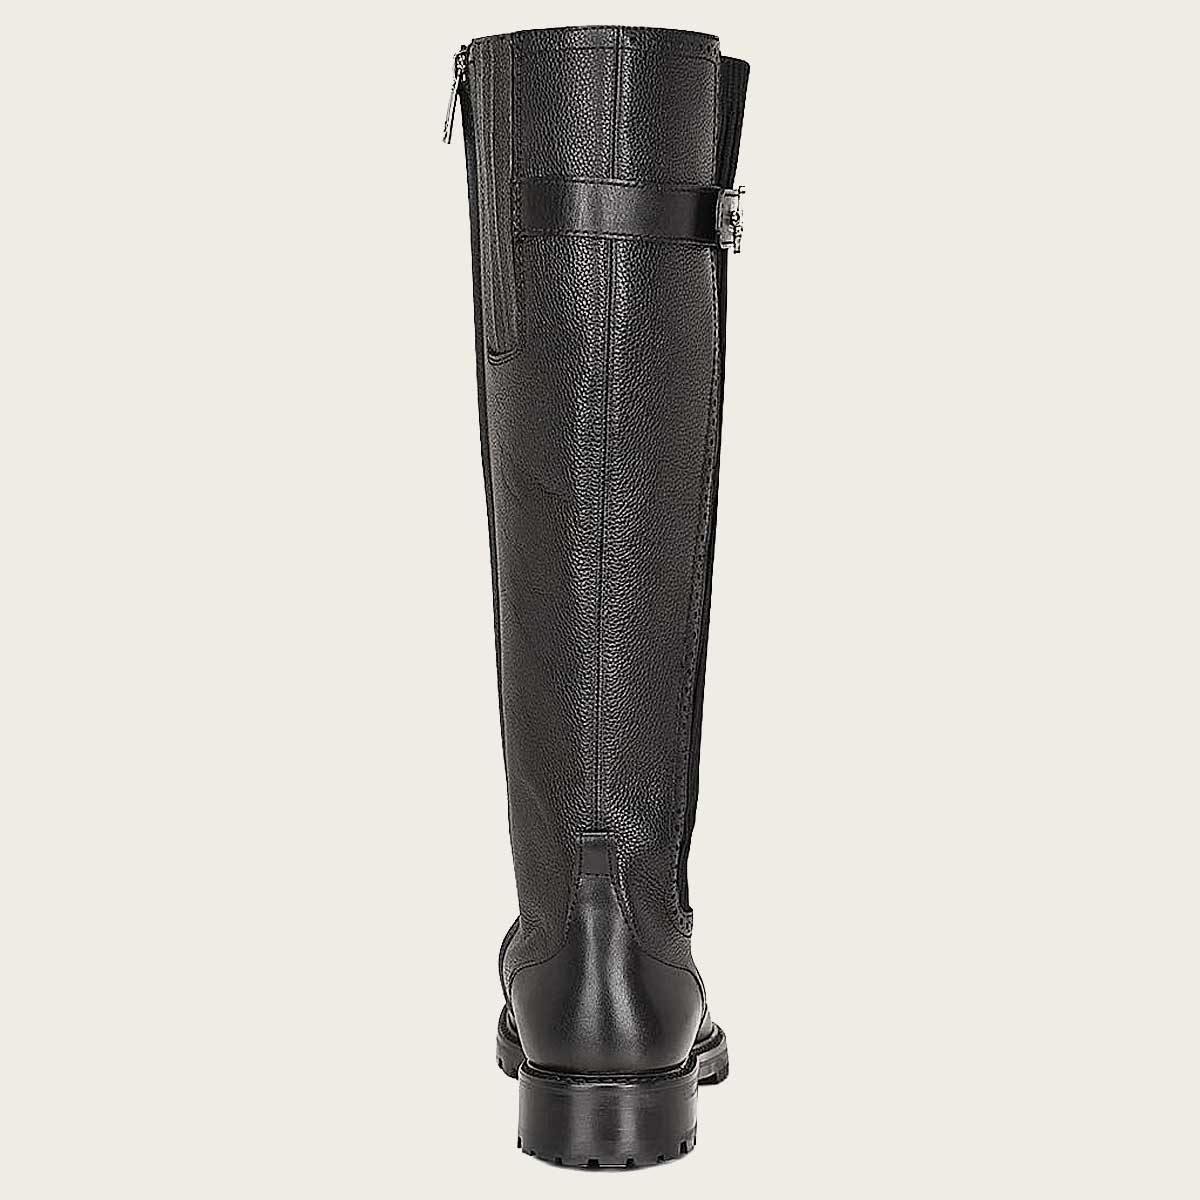 High boot black bovine leather boot